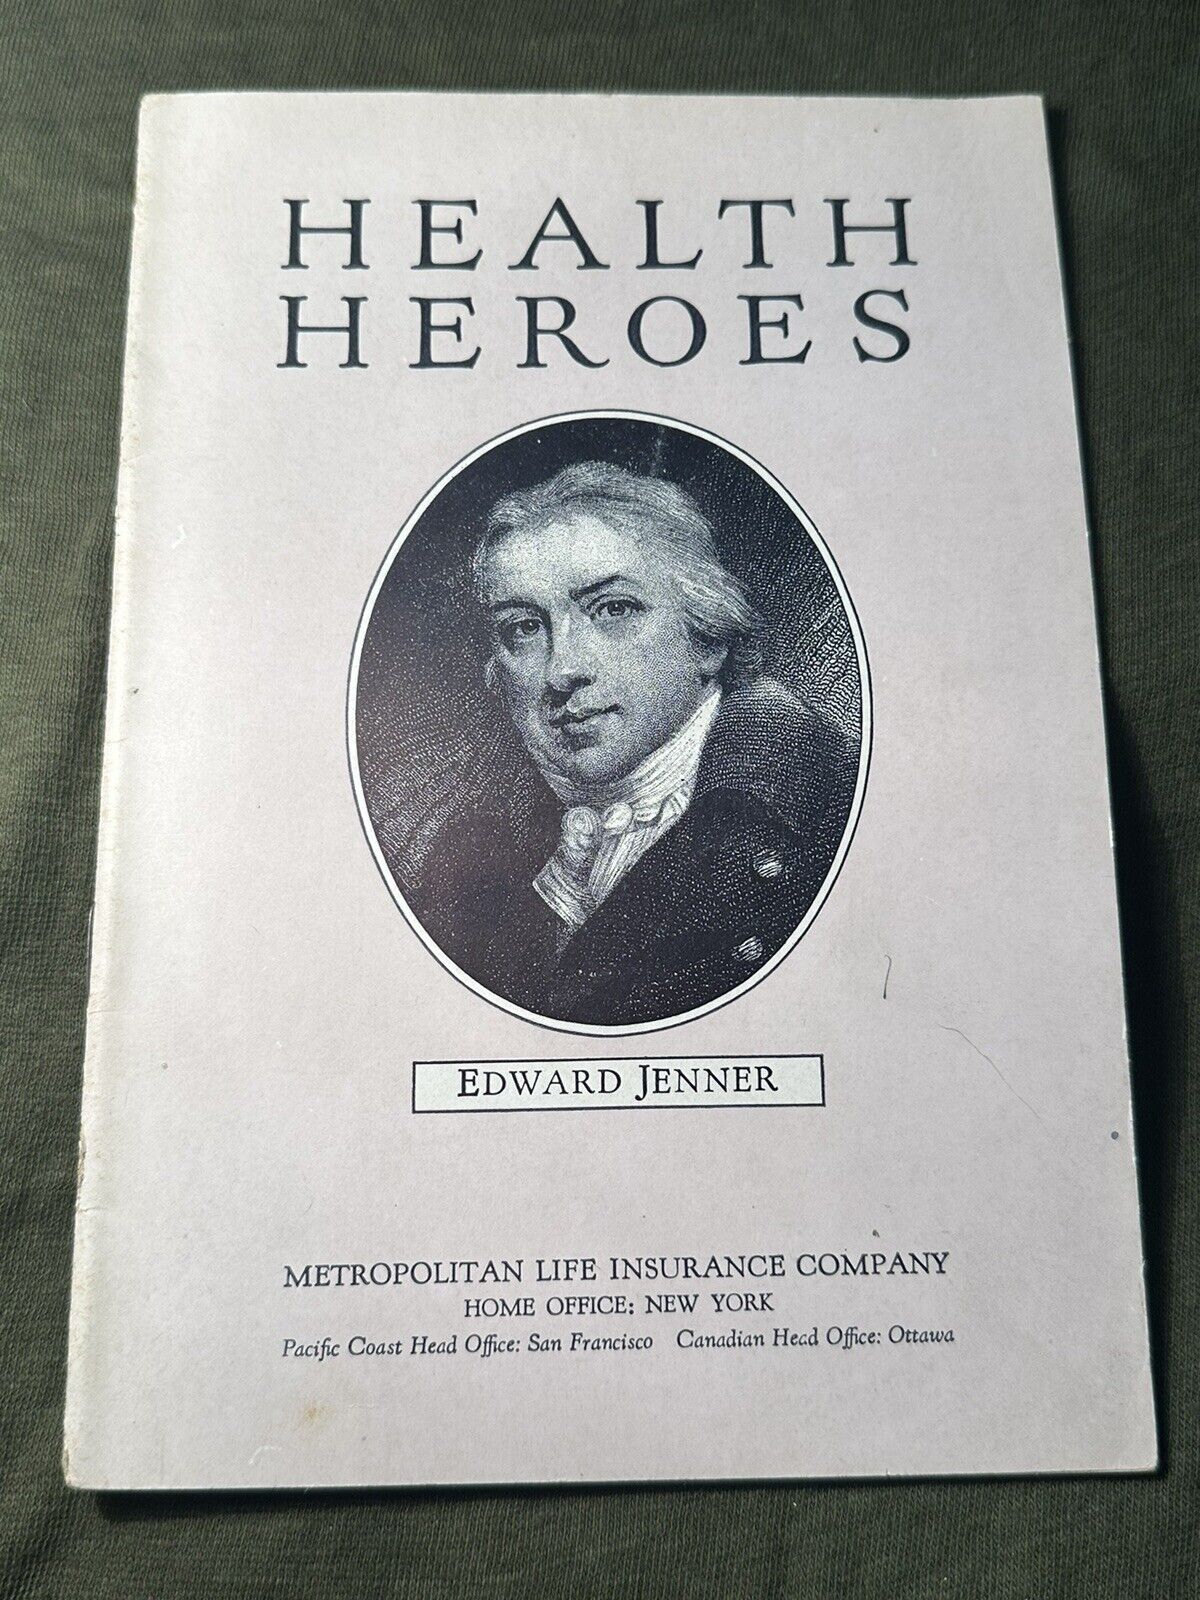 1926 Booklet-Health Heroes Series-Edward Jenner-Metropolitan Life Insurance Co